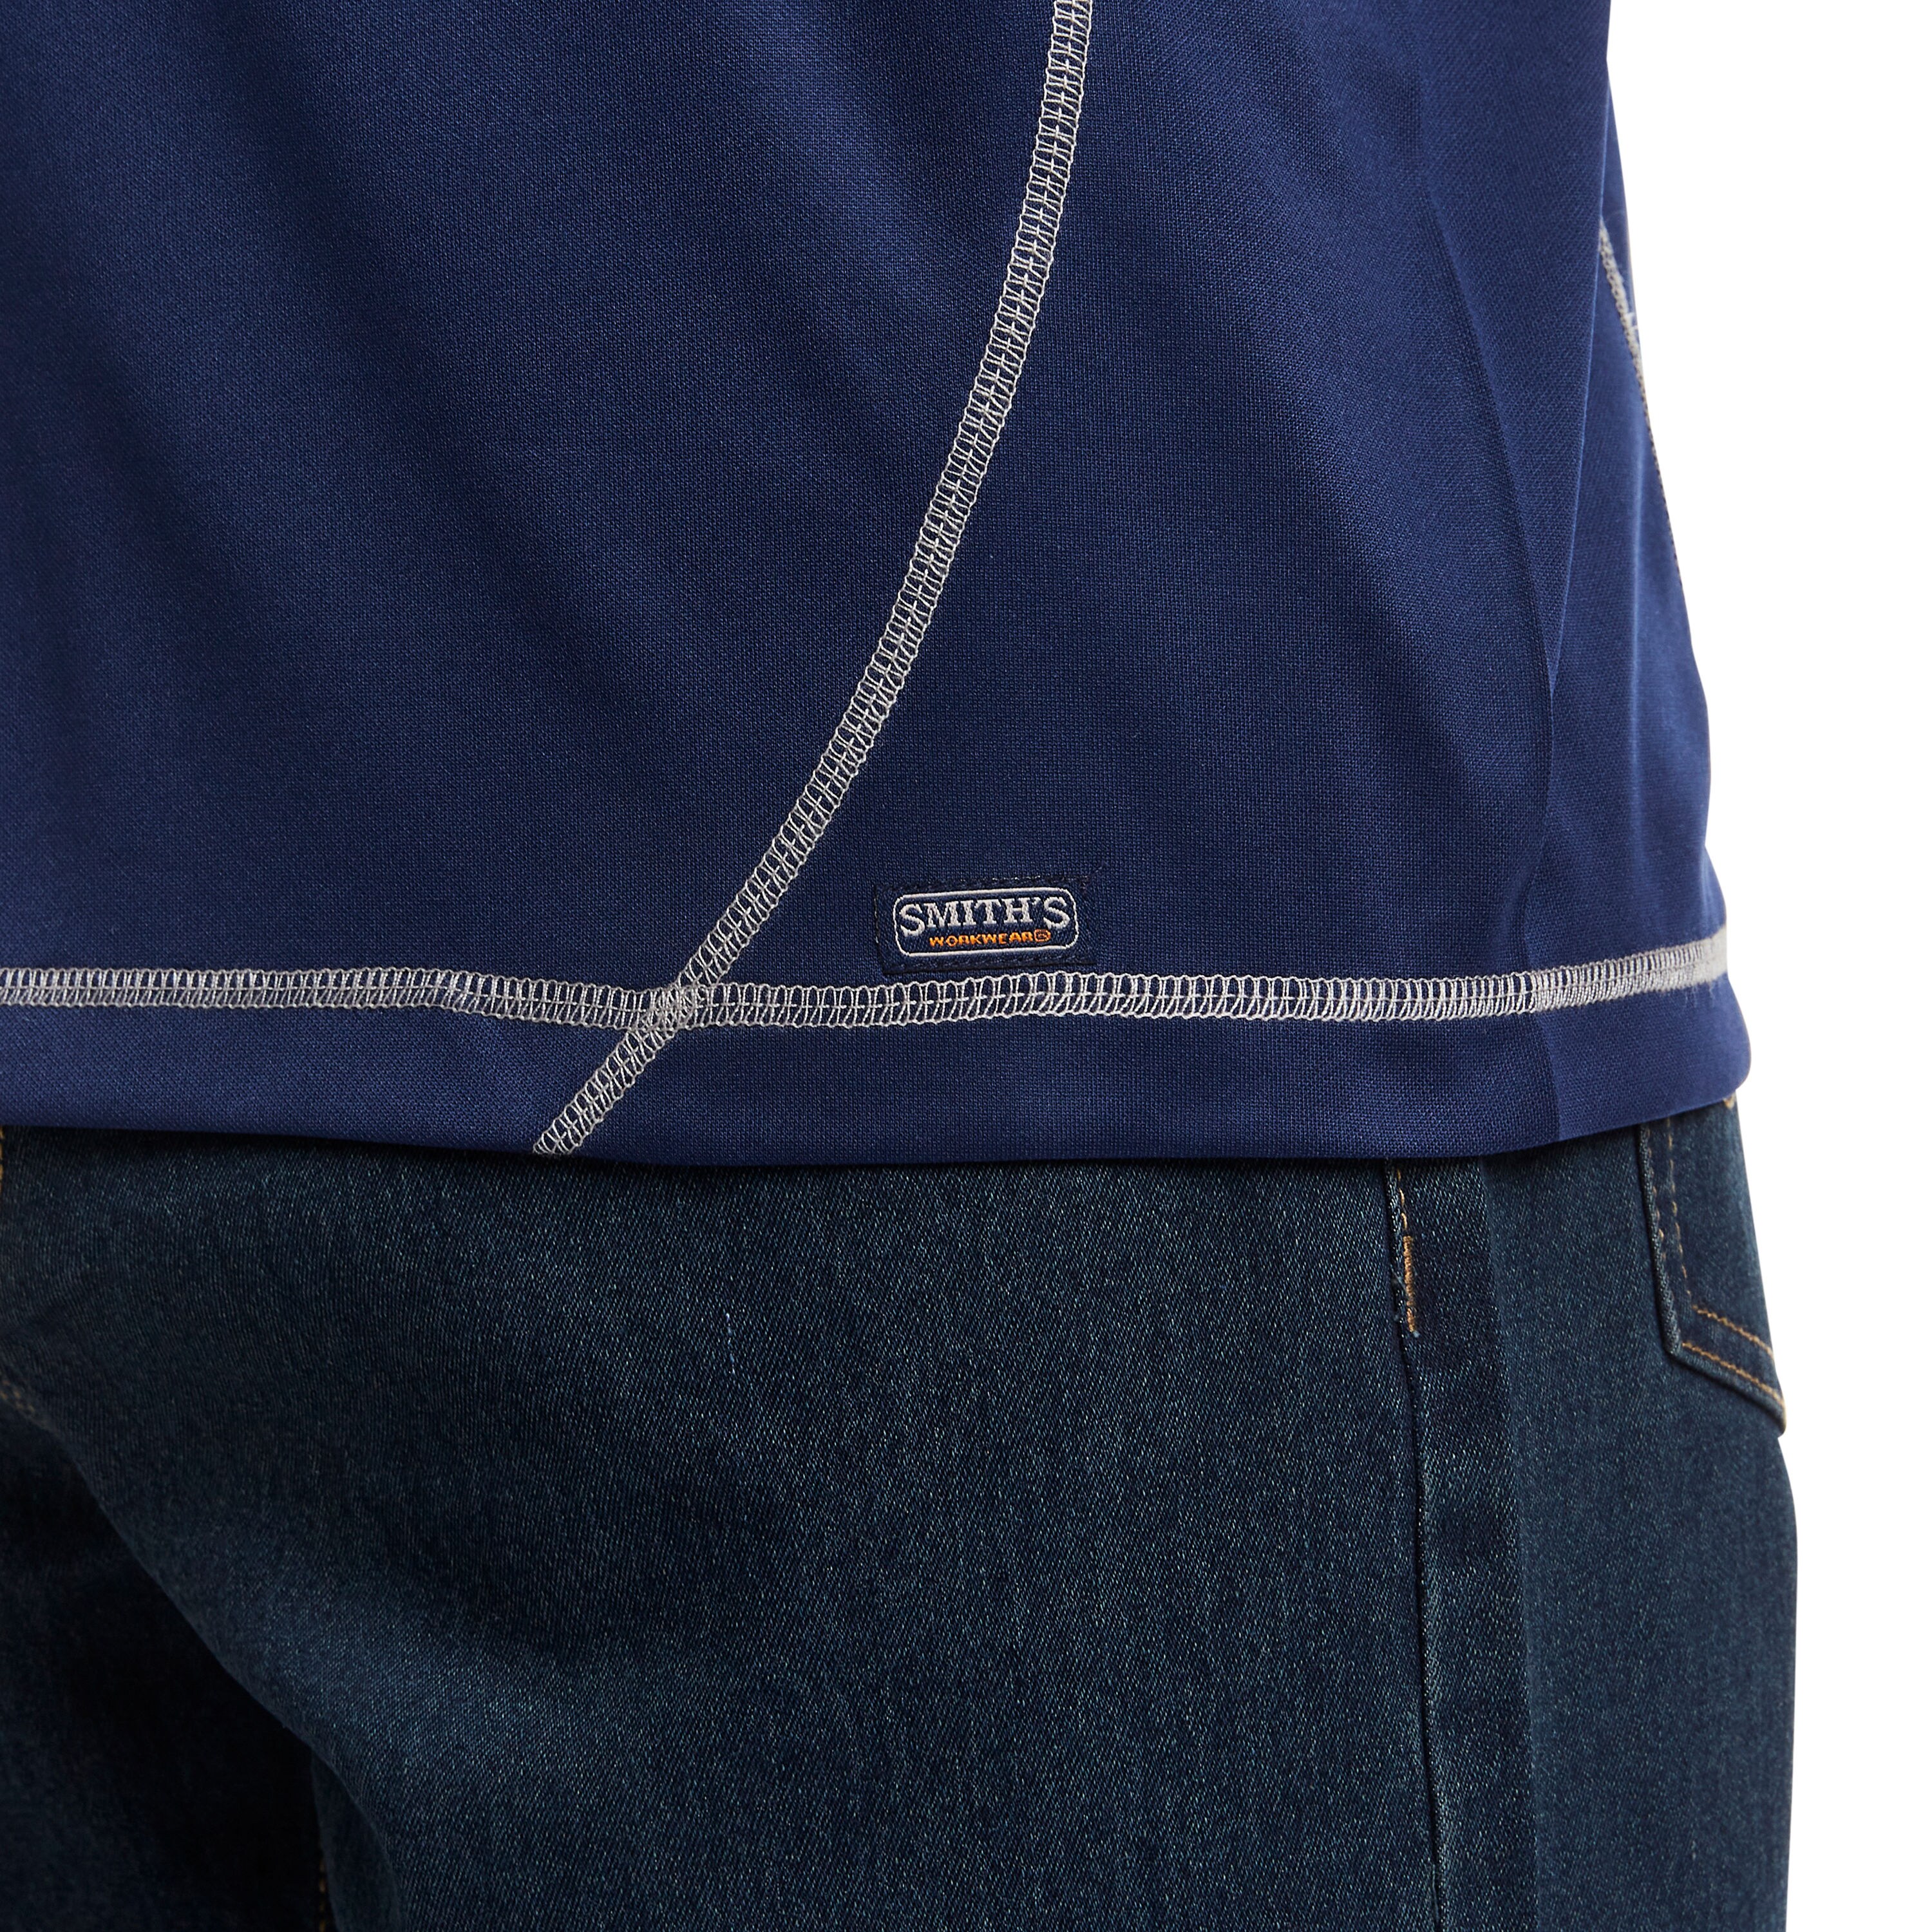 Smith's Workwear Denim Camo-199g Cotton/Polyester Thermal Base Layer  (Medium)